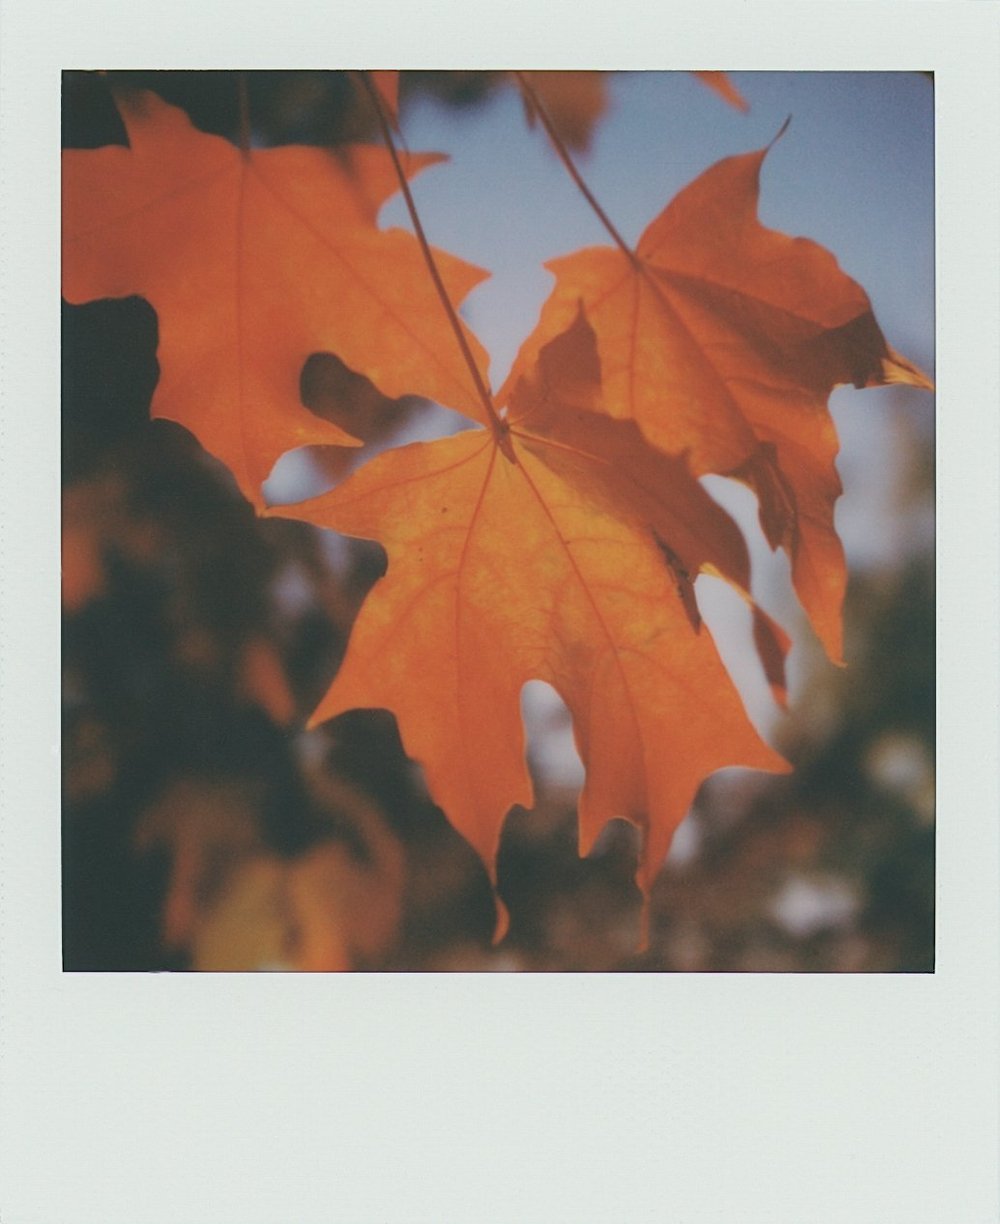 “Autumn Hue” by Casey Reit